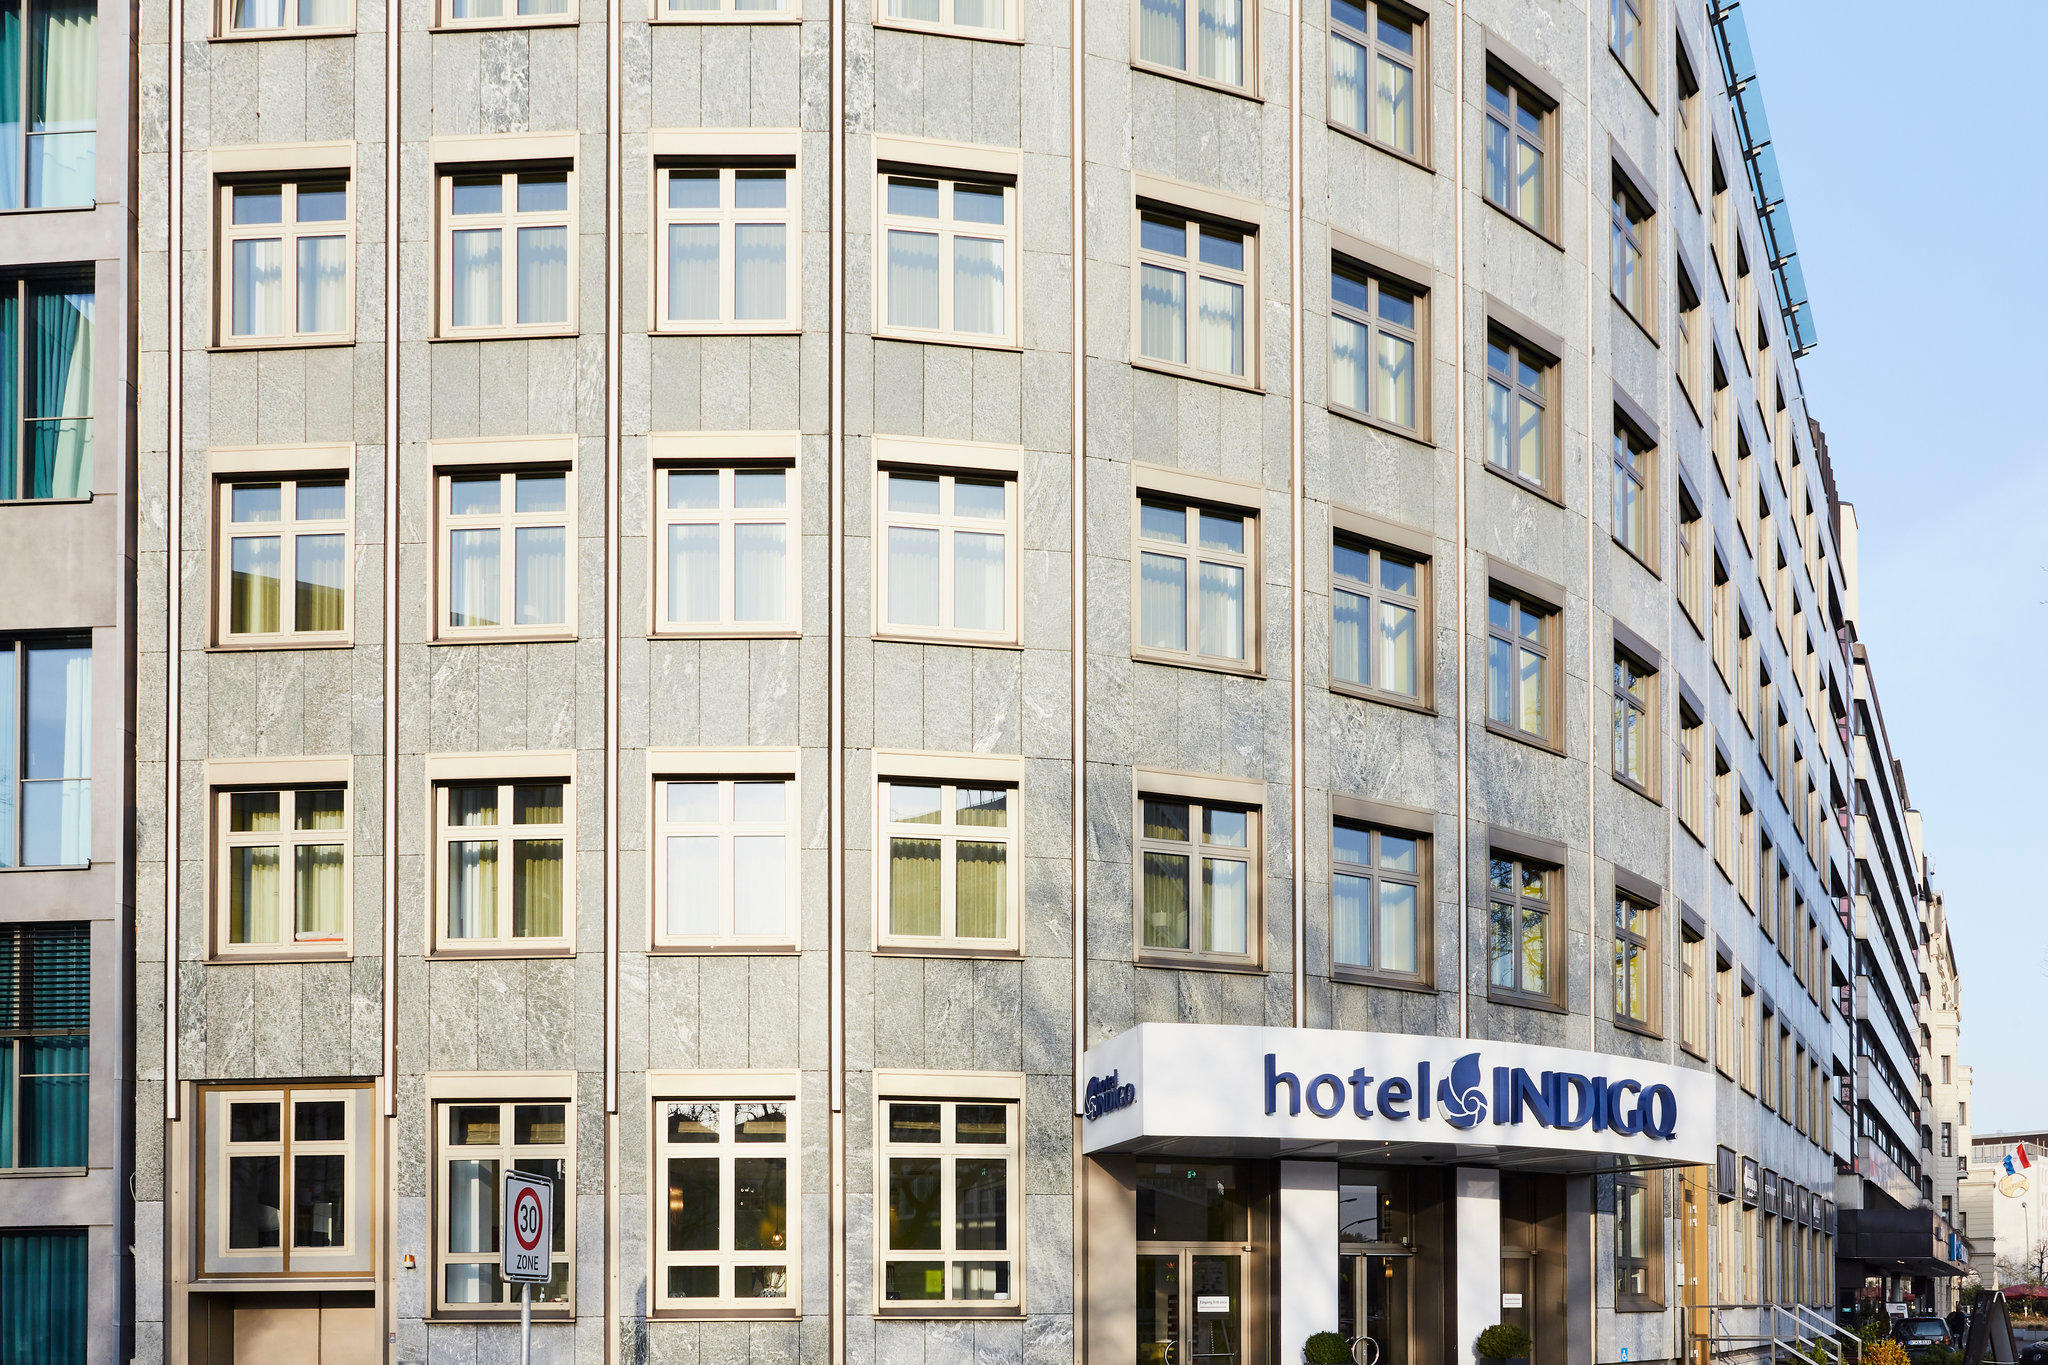 Hotel Indigo Berlin - Ku'Damm, an IHG Hotel, Hardenbergstrasse 15 in Berlin